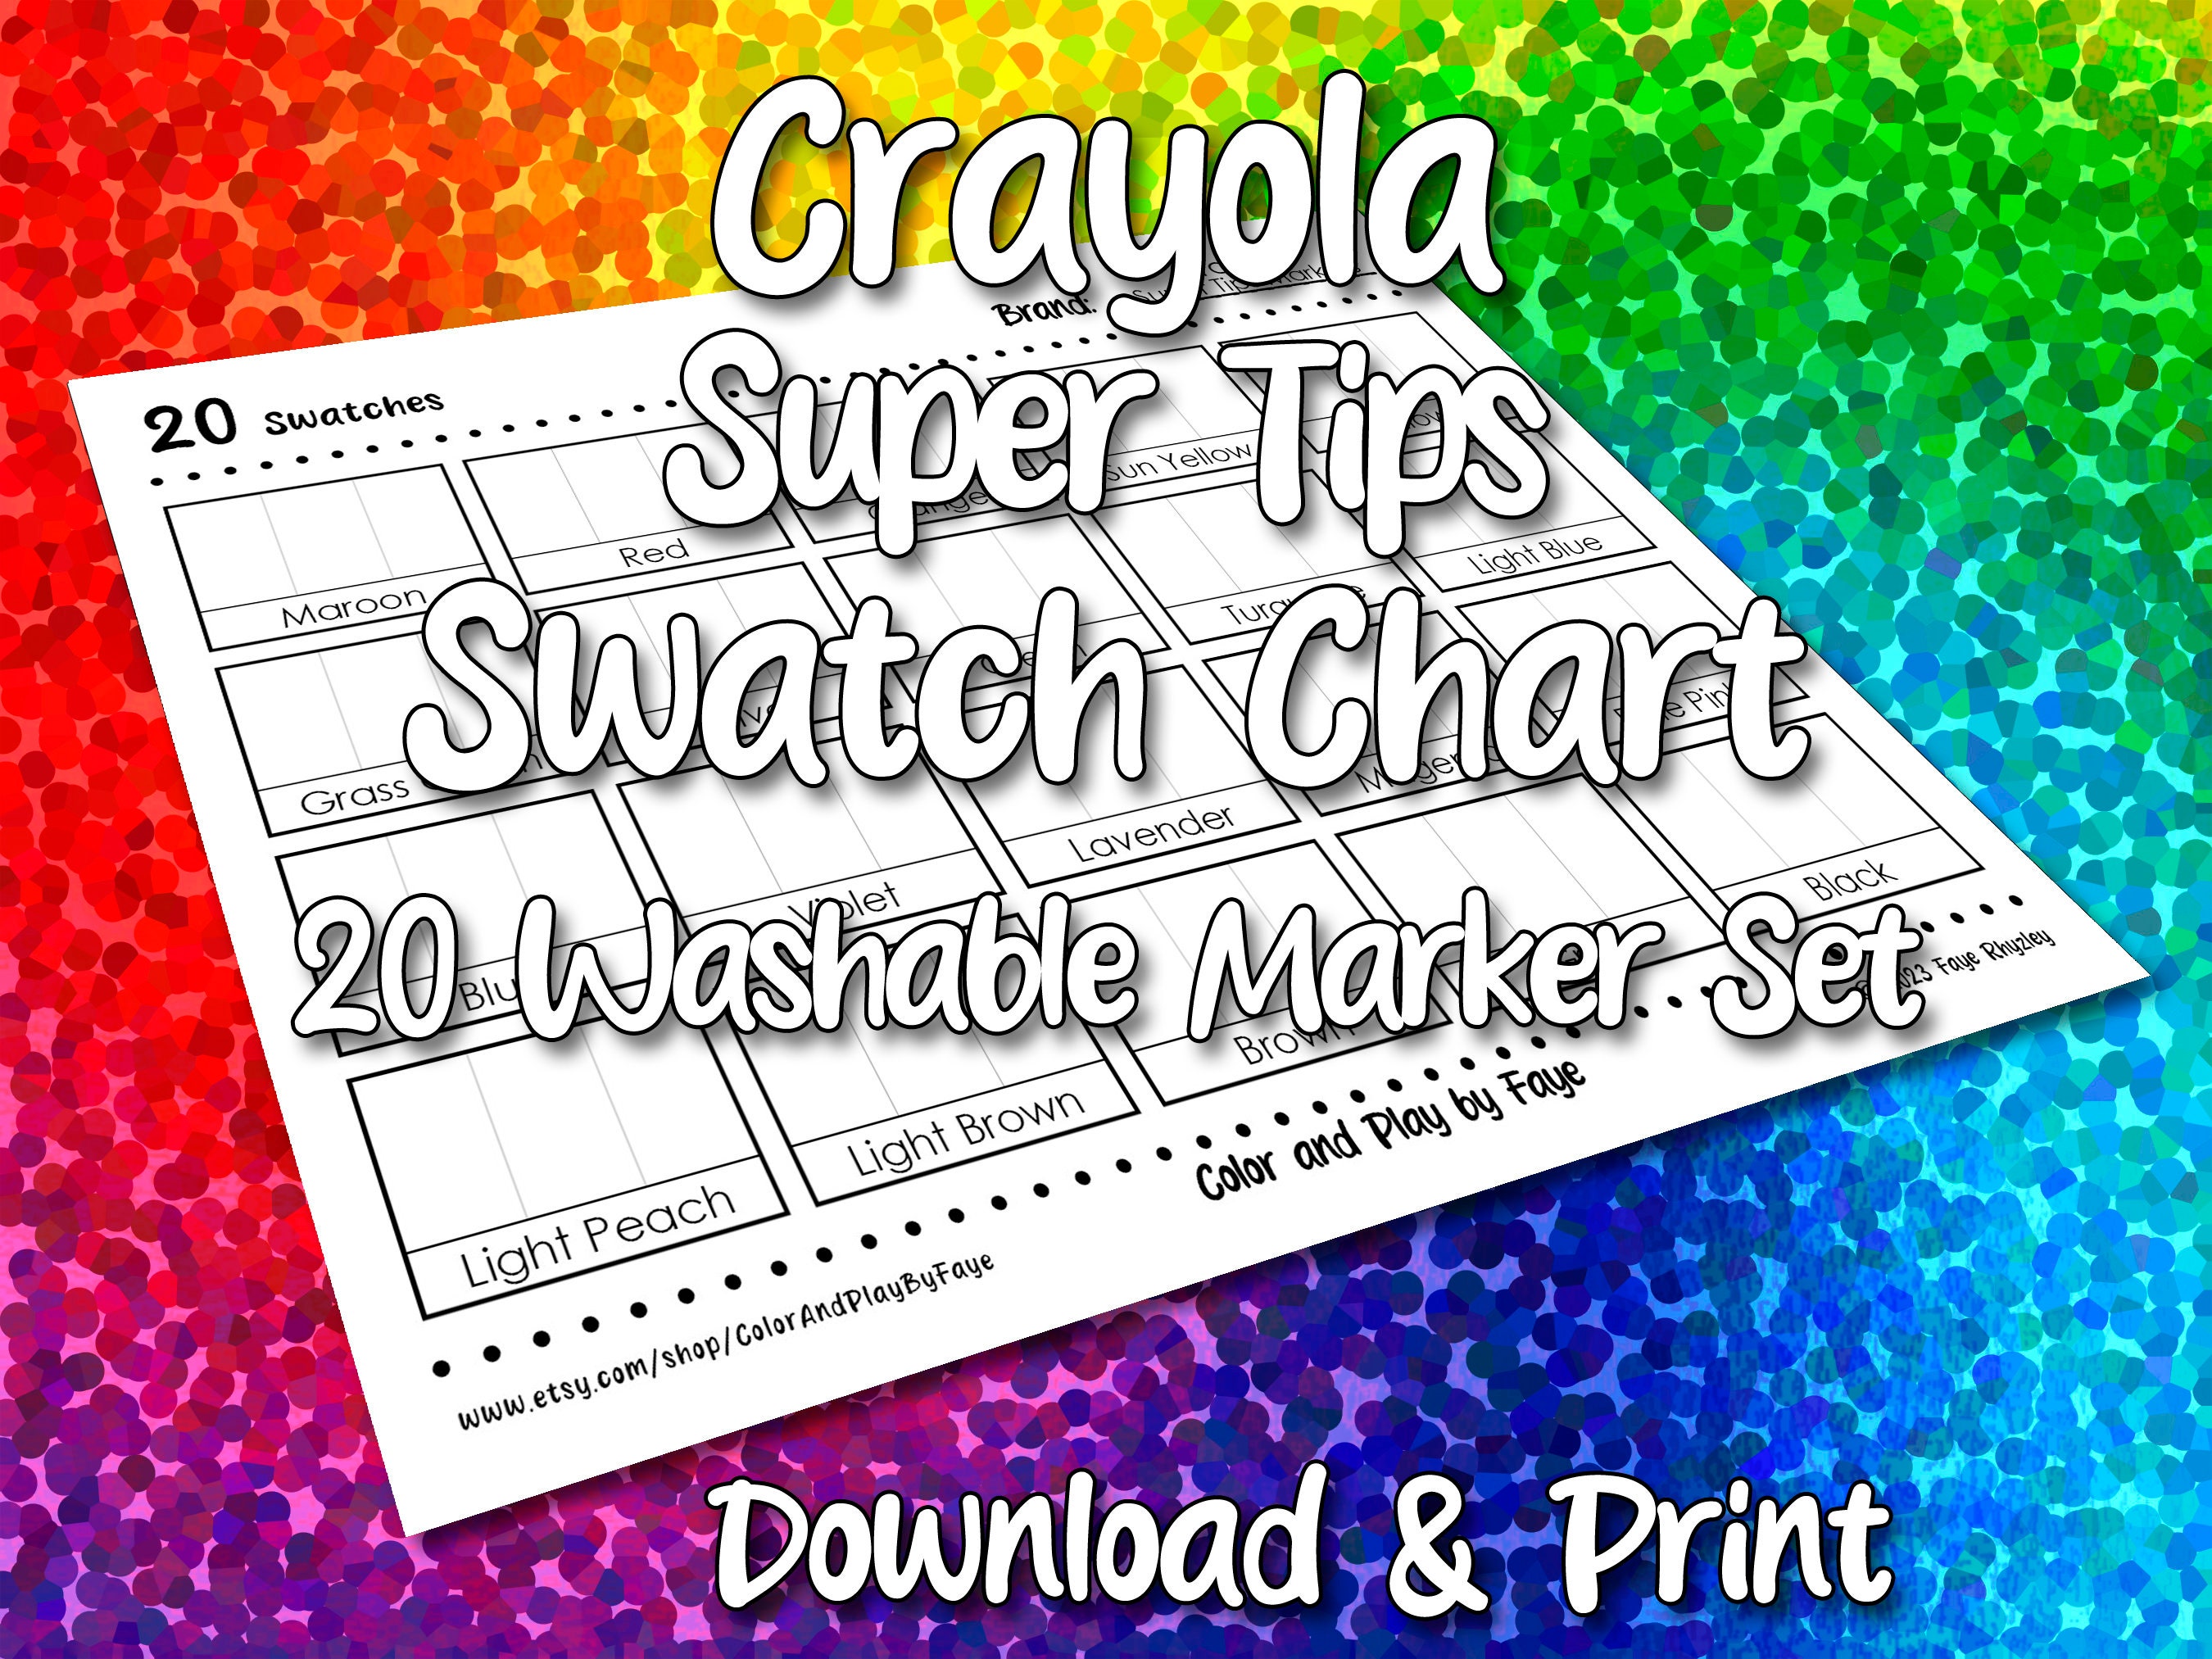 CARTGET Basics Supertip Washable Markers, 40 Colors 40 Colors Supertip